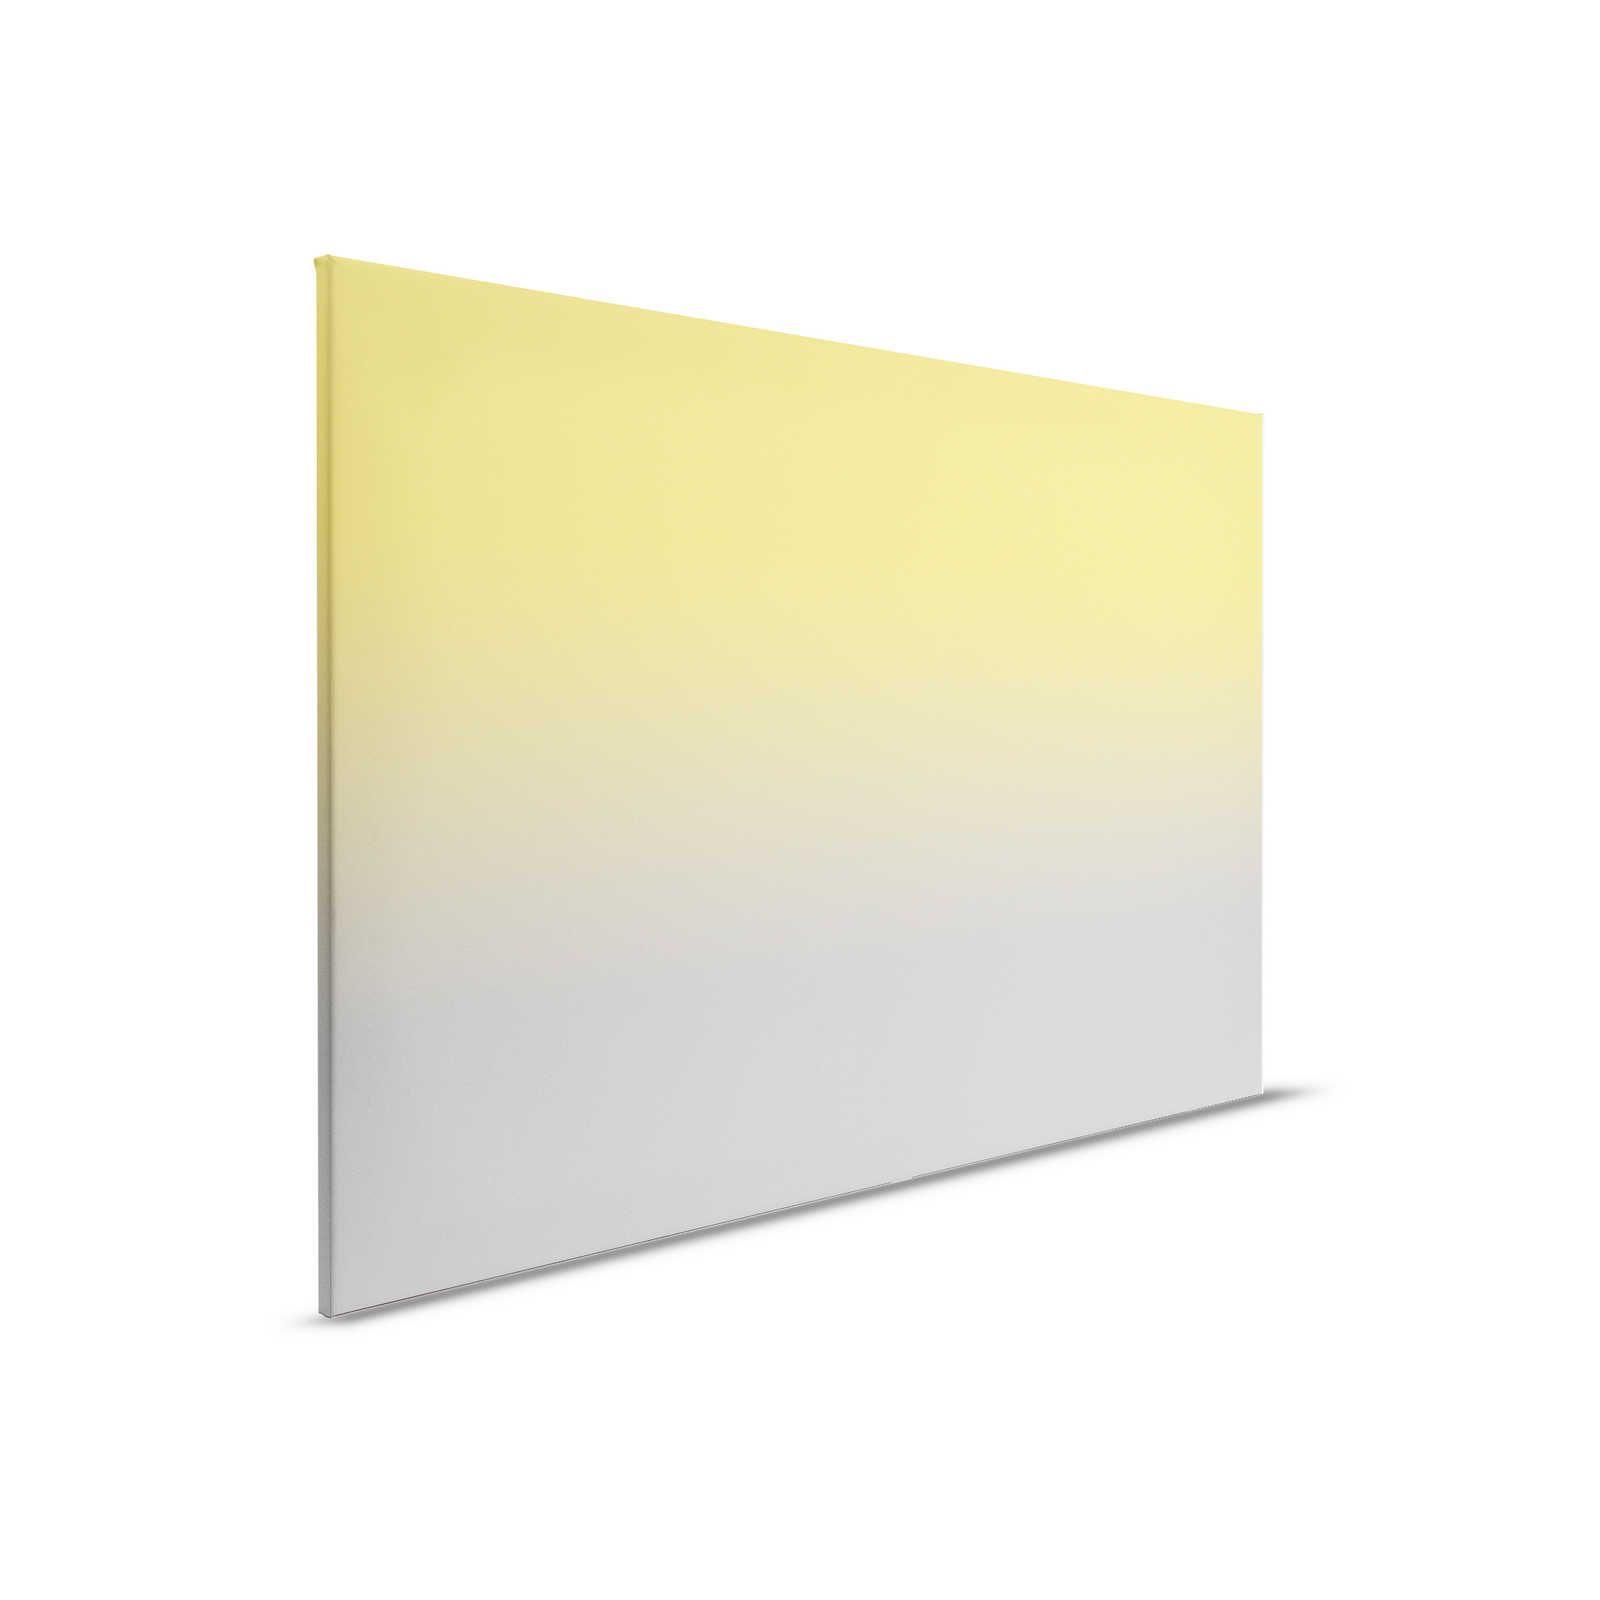         Colour Studio 1 - Leinwandbild Gelb & Grau Trendfarben Ombre Effekt – 0,90 m x 0,60 m
    